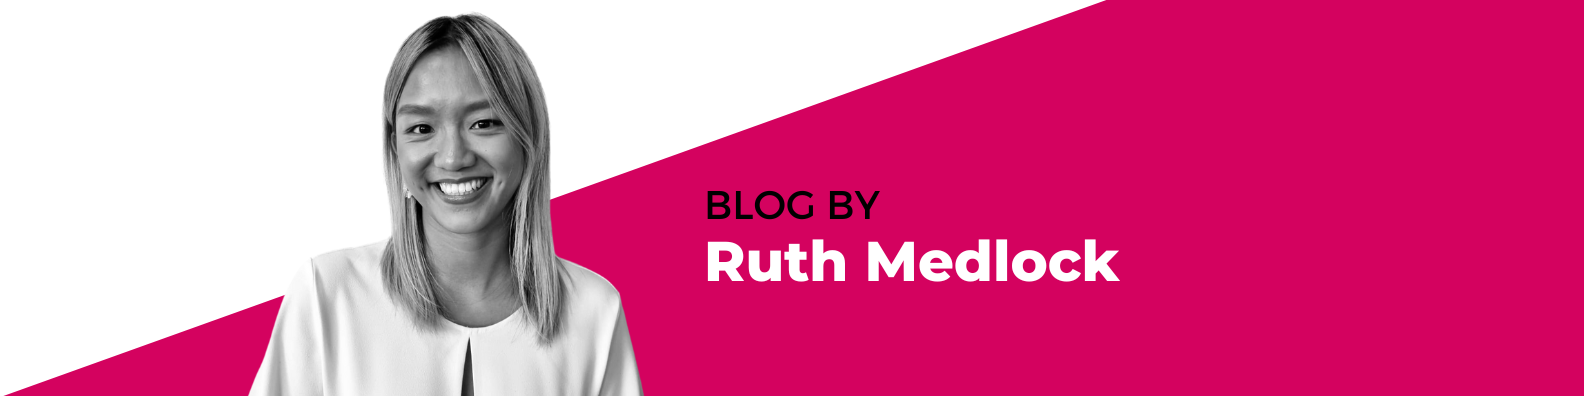 blog by ruth medlock